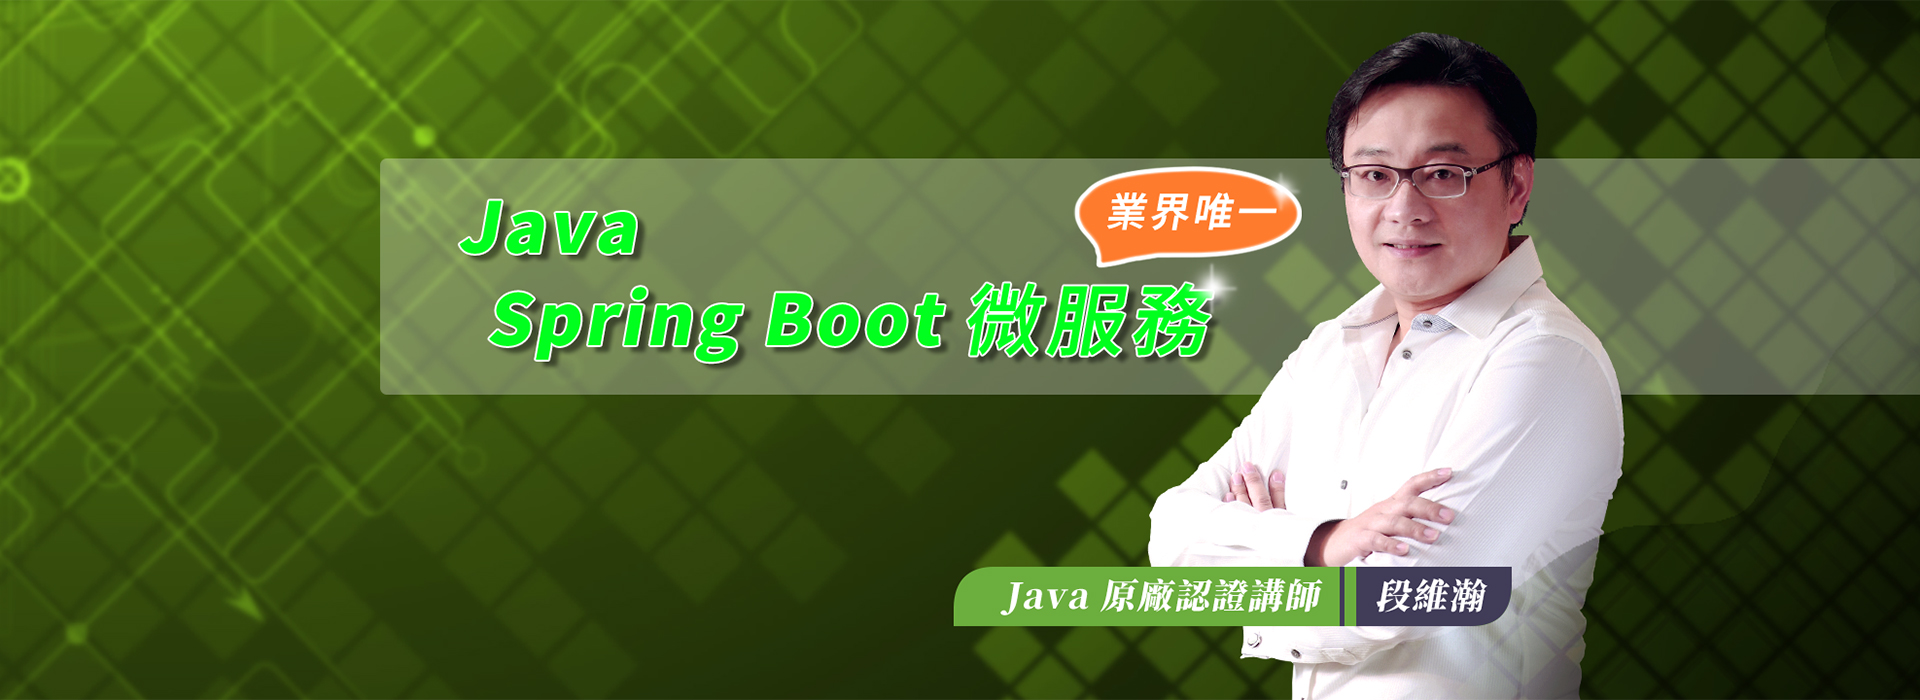 Java Spring Boot 微服務